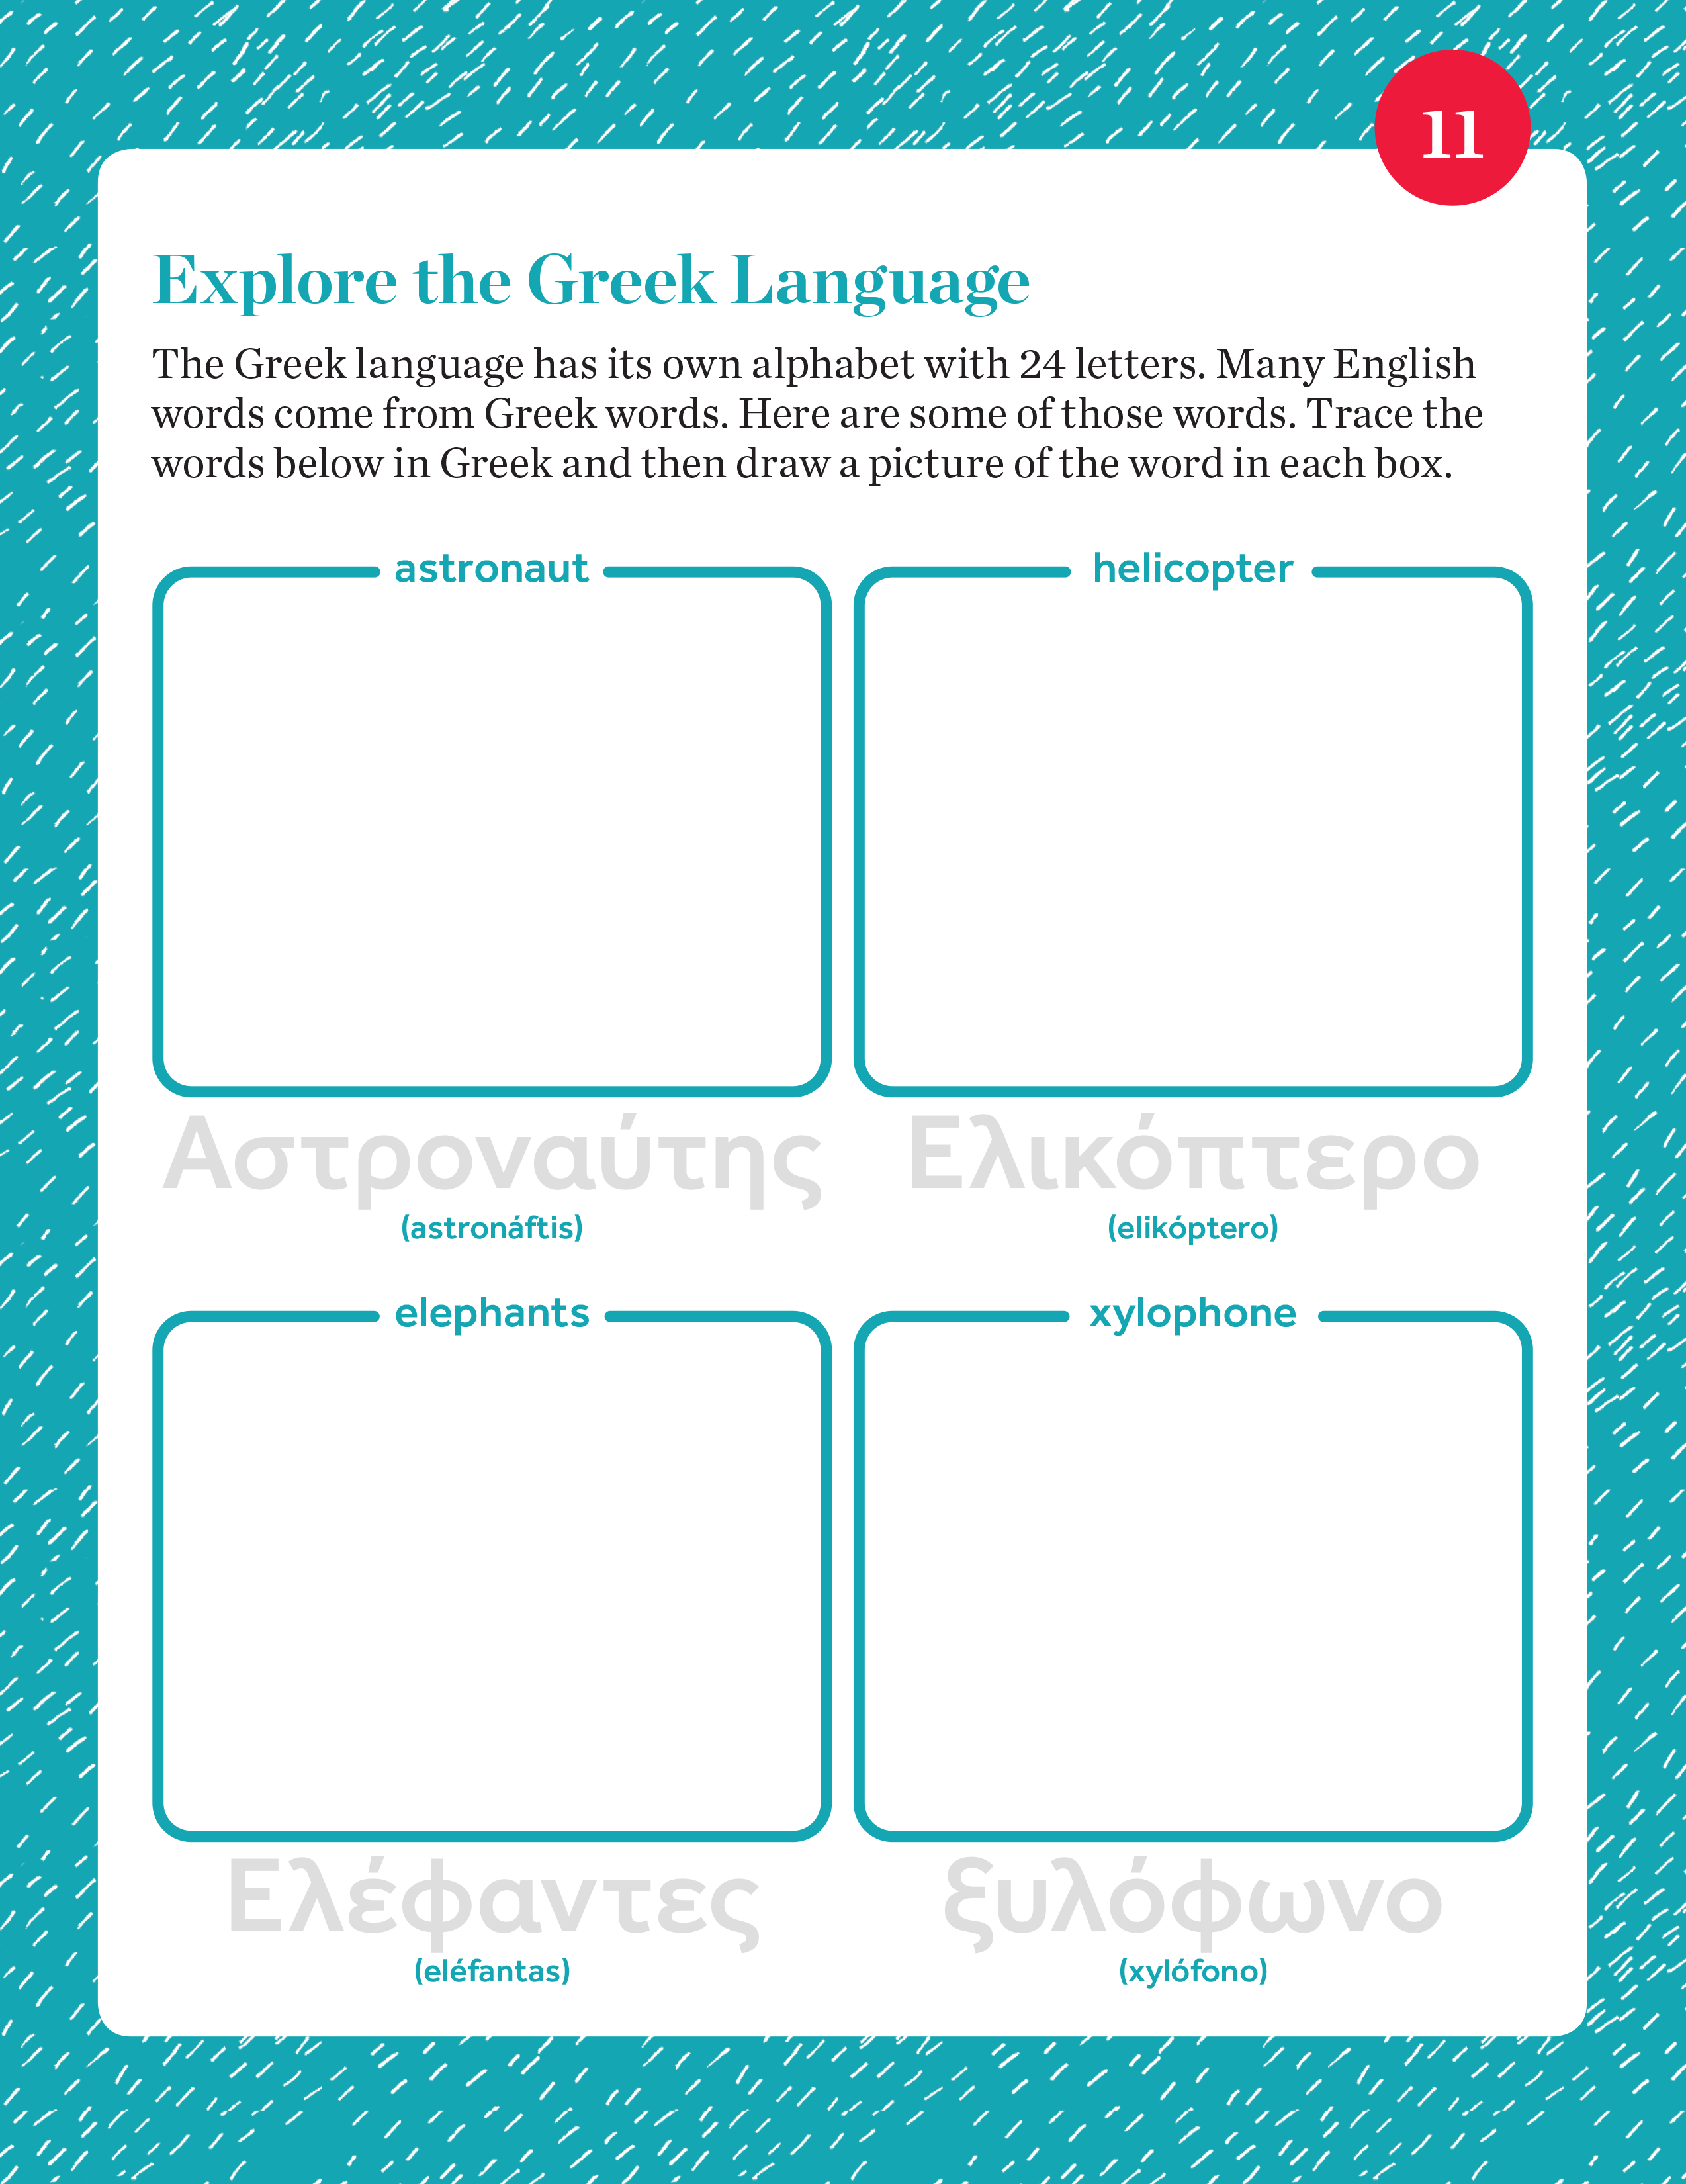 Explore the Greek Language